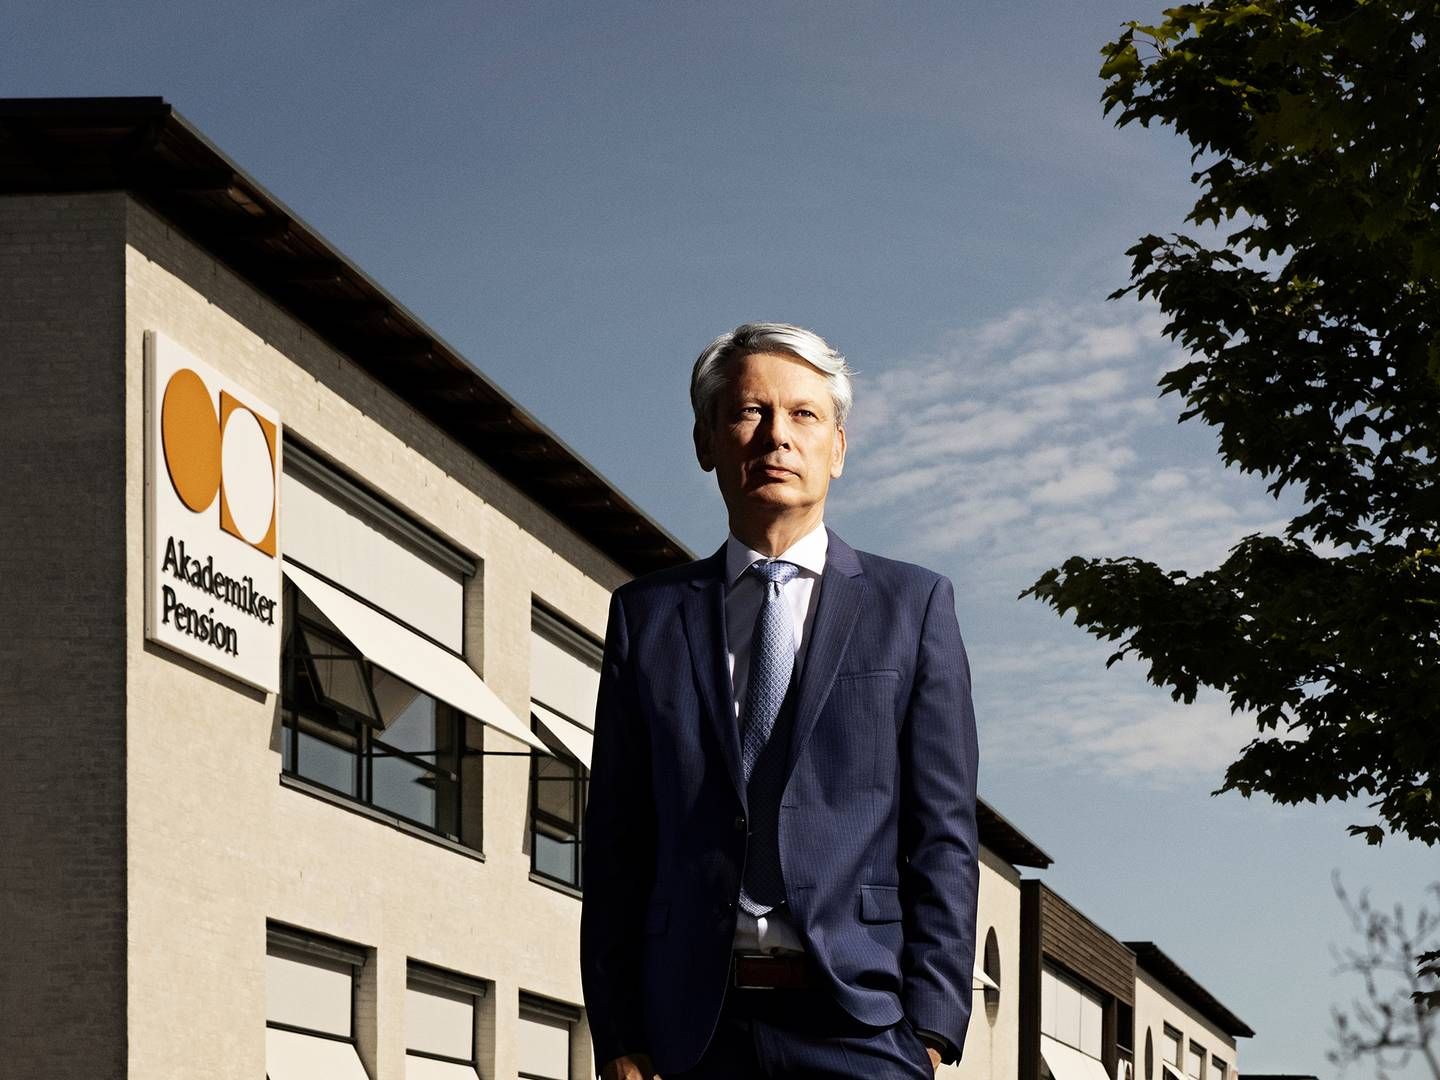 AkademikerPension CEO Jens Munch Holst. | Photo: Pr/akademikerpension